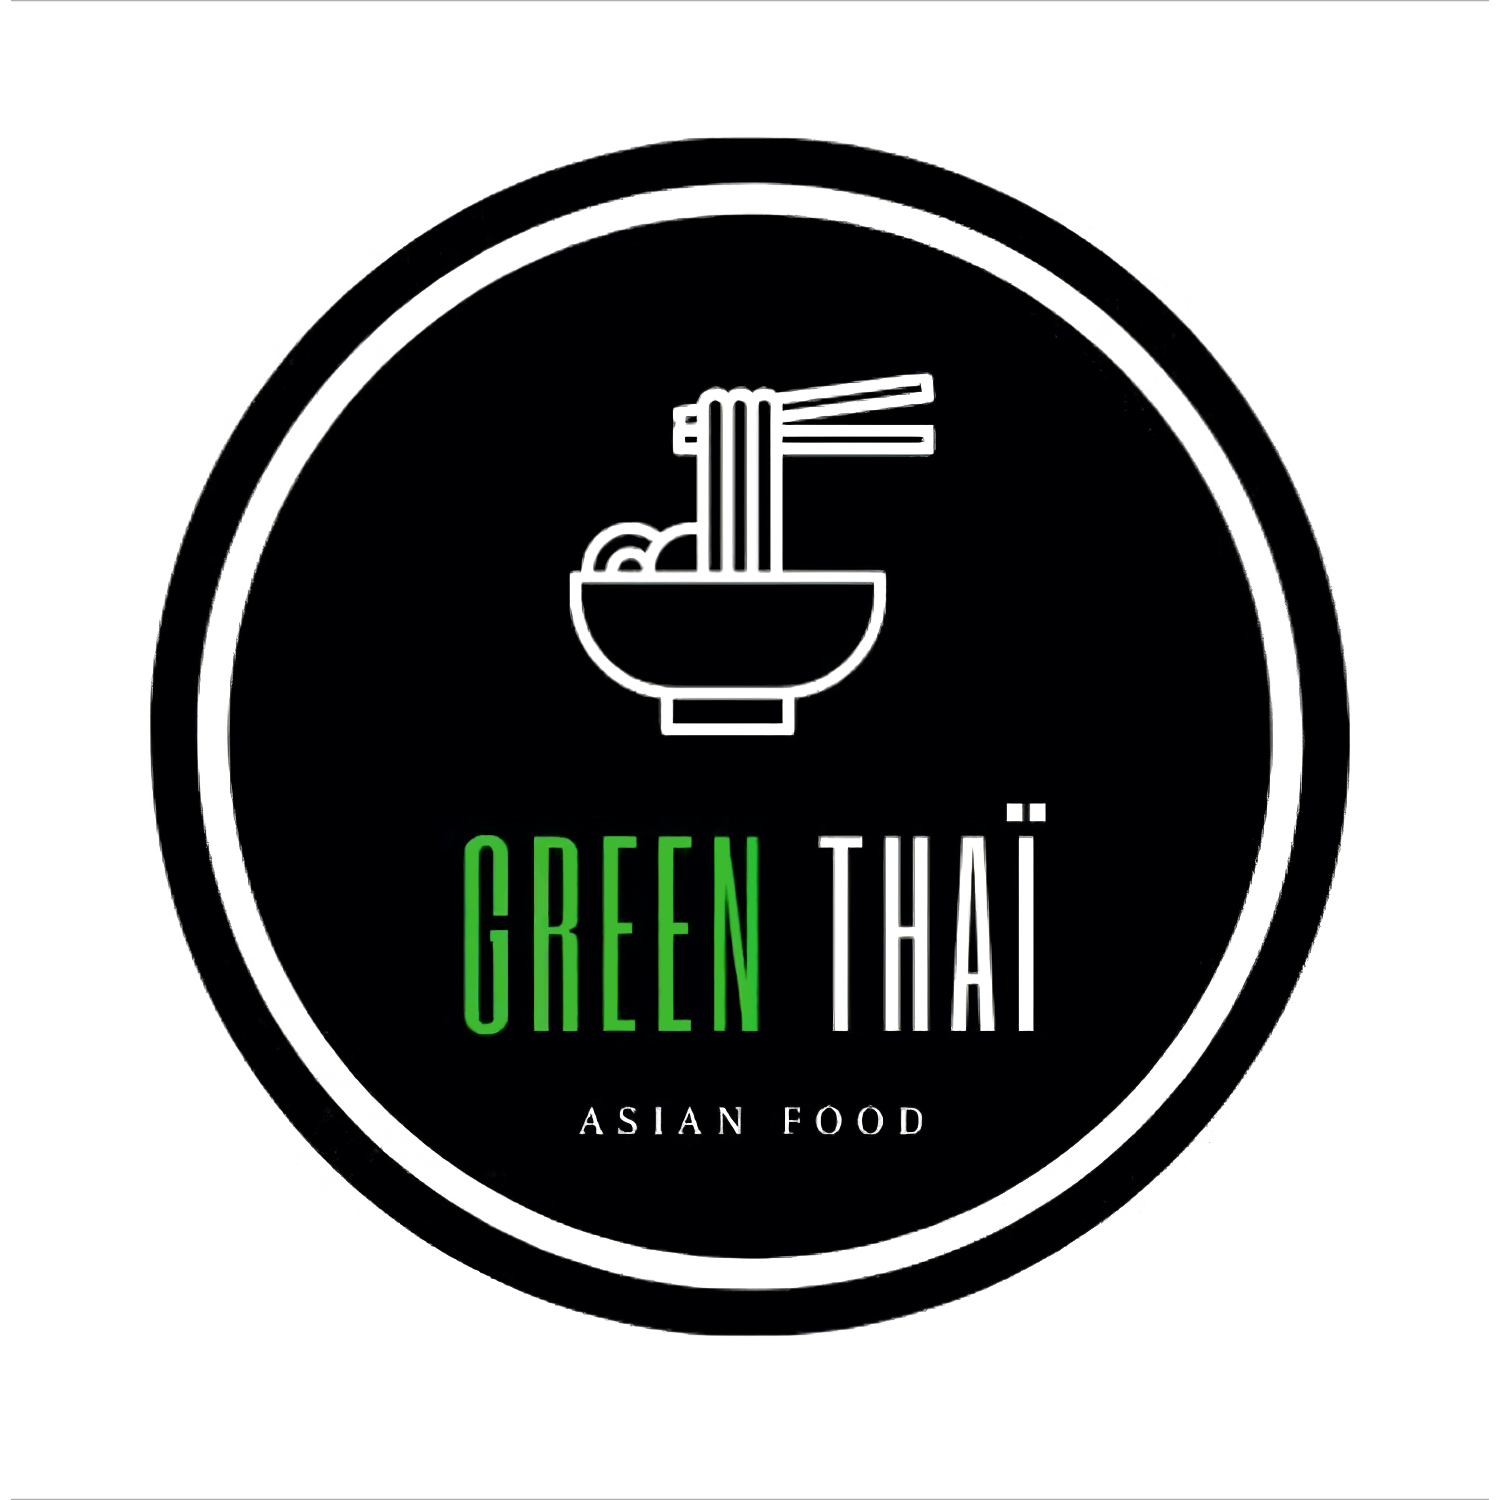 Noir_Green_Thai_Full_Transparence_Fond Blanc.png